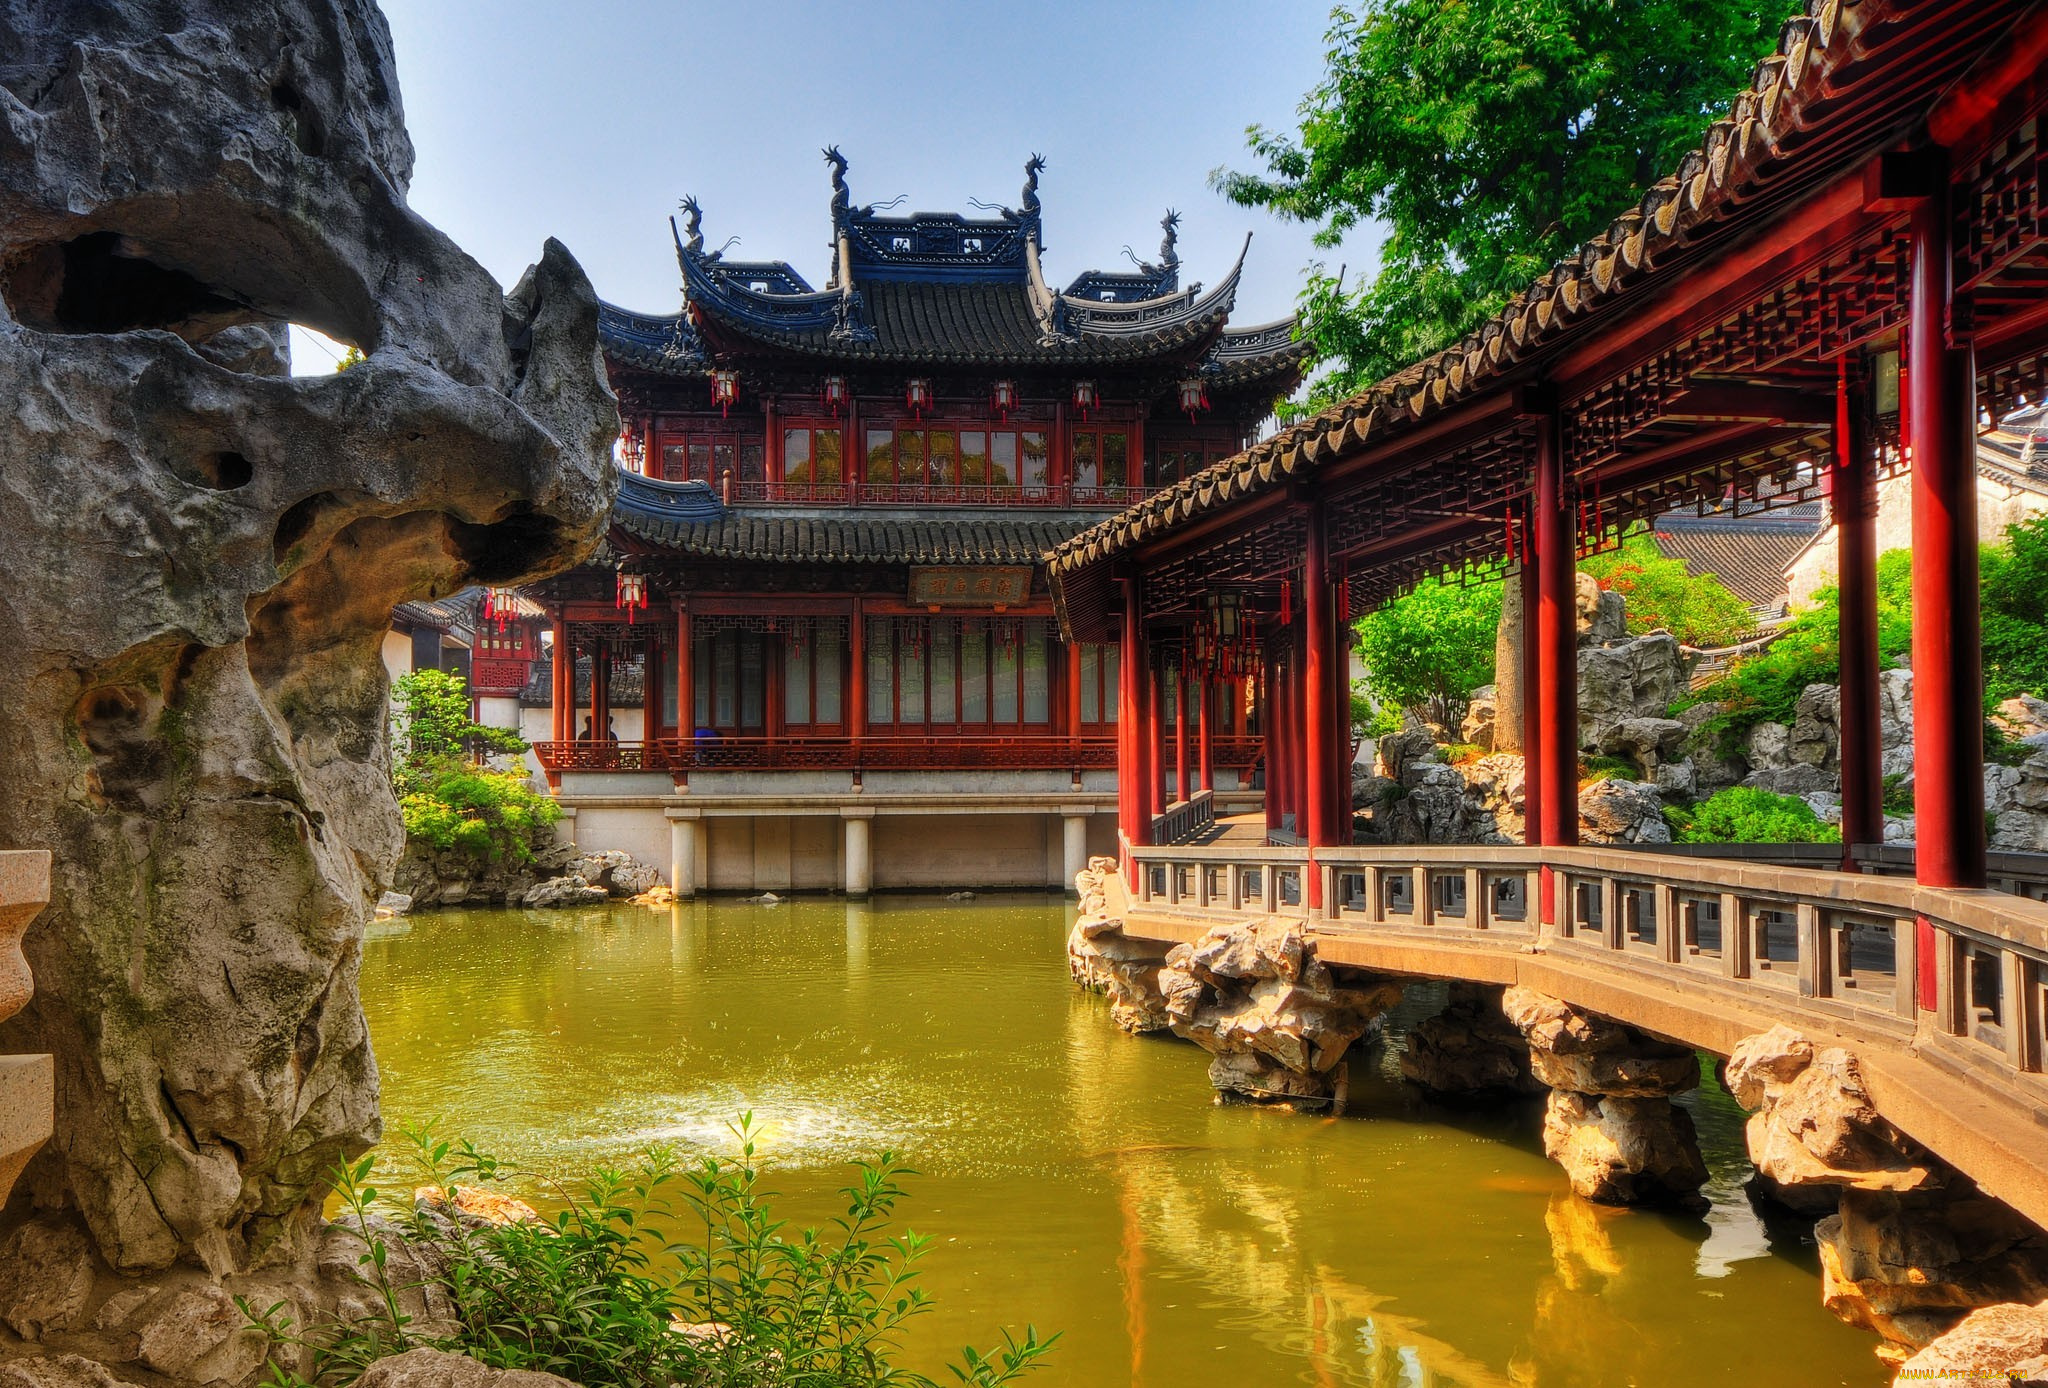 парк, юйян, шанхай, китай, города, дворцы, замки, крепости, пруд, пагода, колонны, красный, мостик